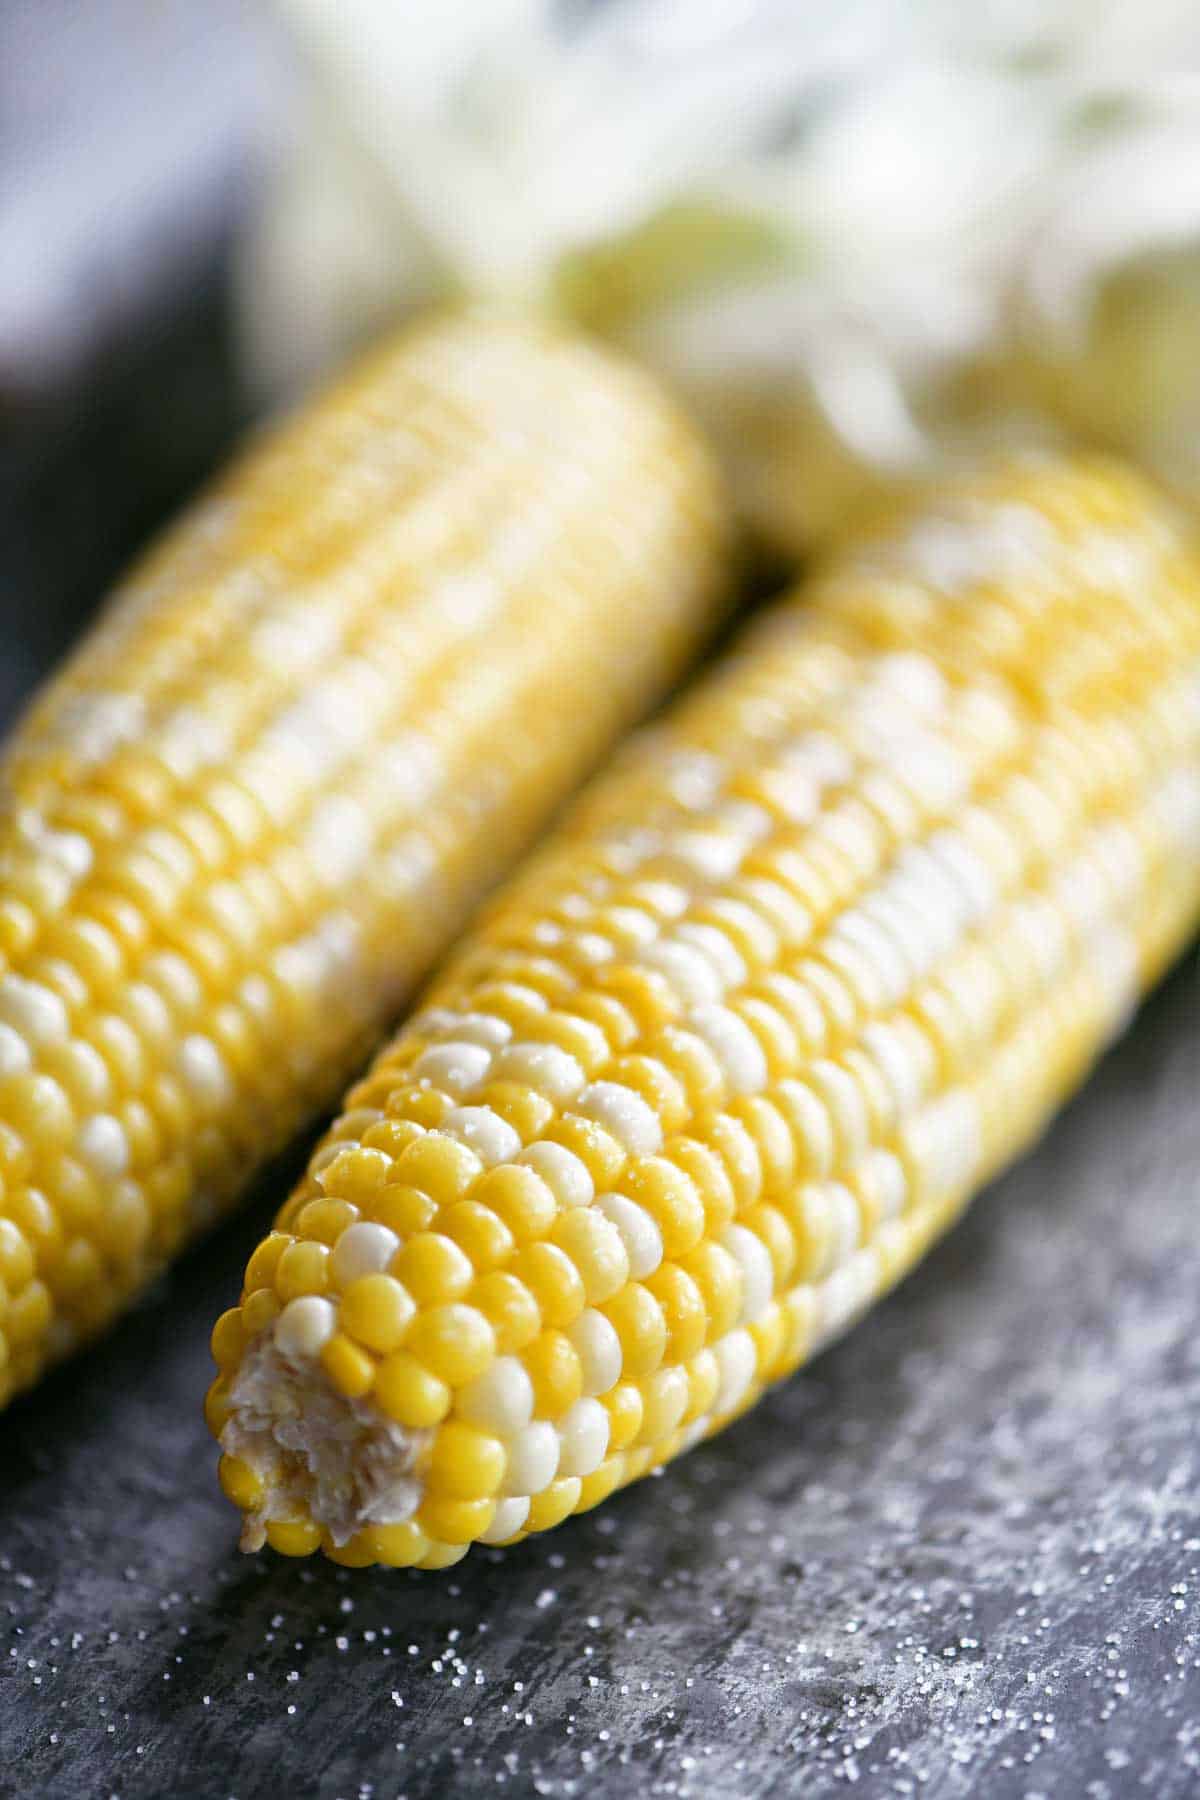 microwaving corn on the cob